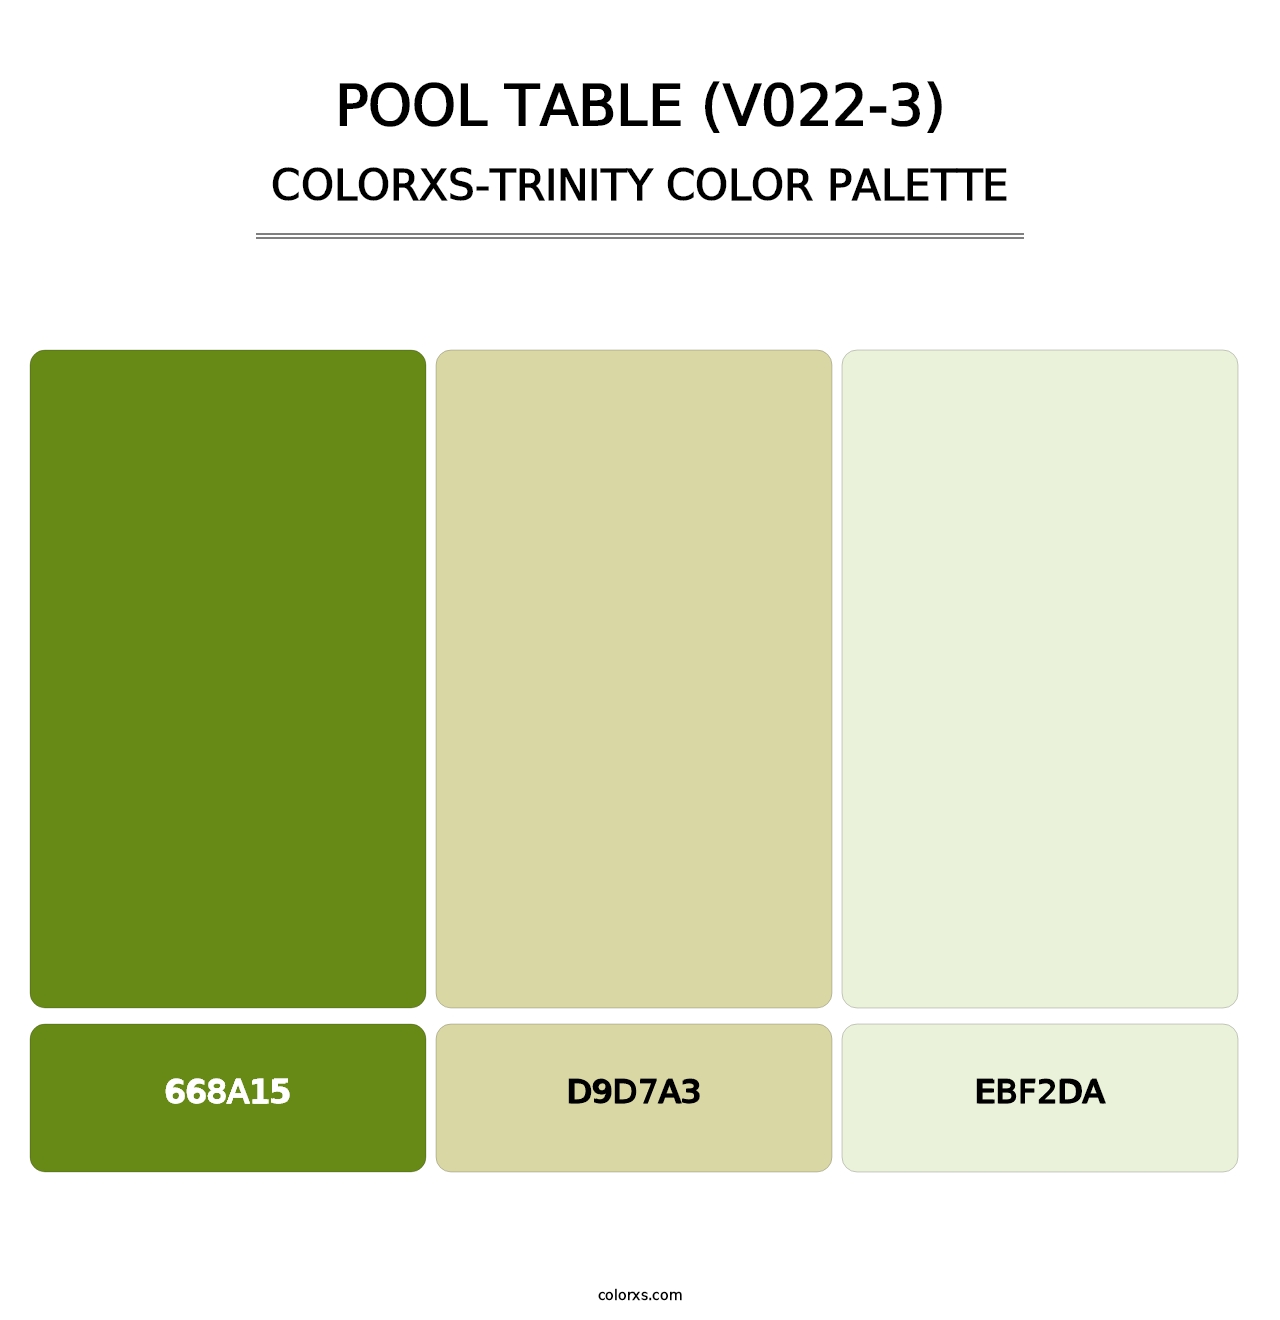 Pool Table (V022-3) - Colorxs Trinity Palette